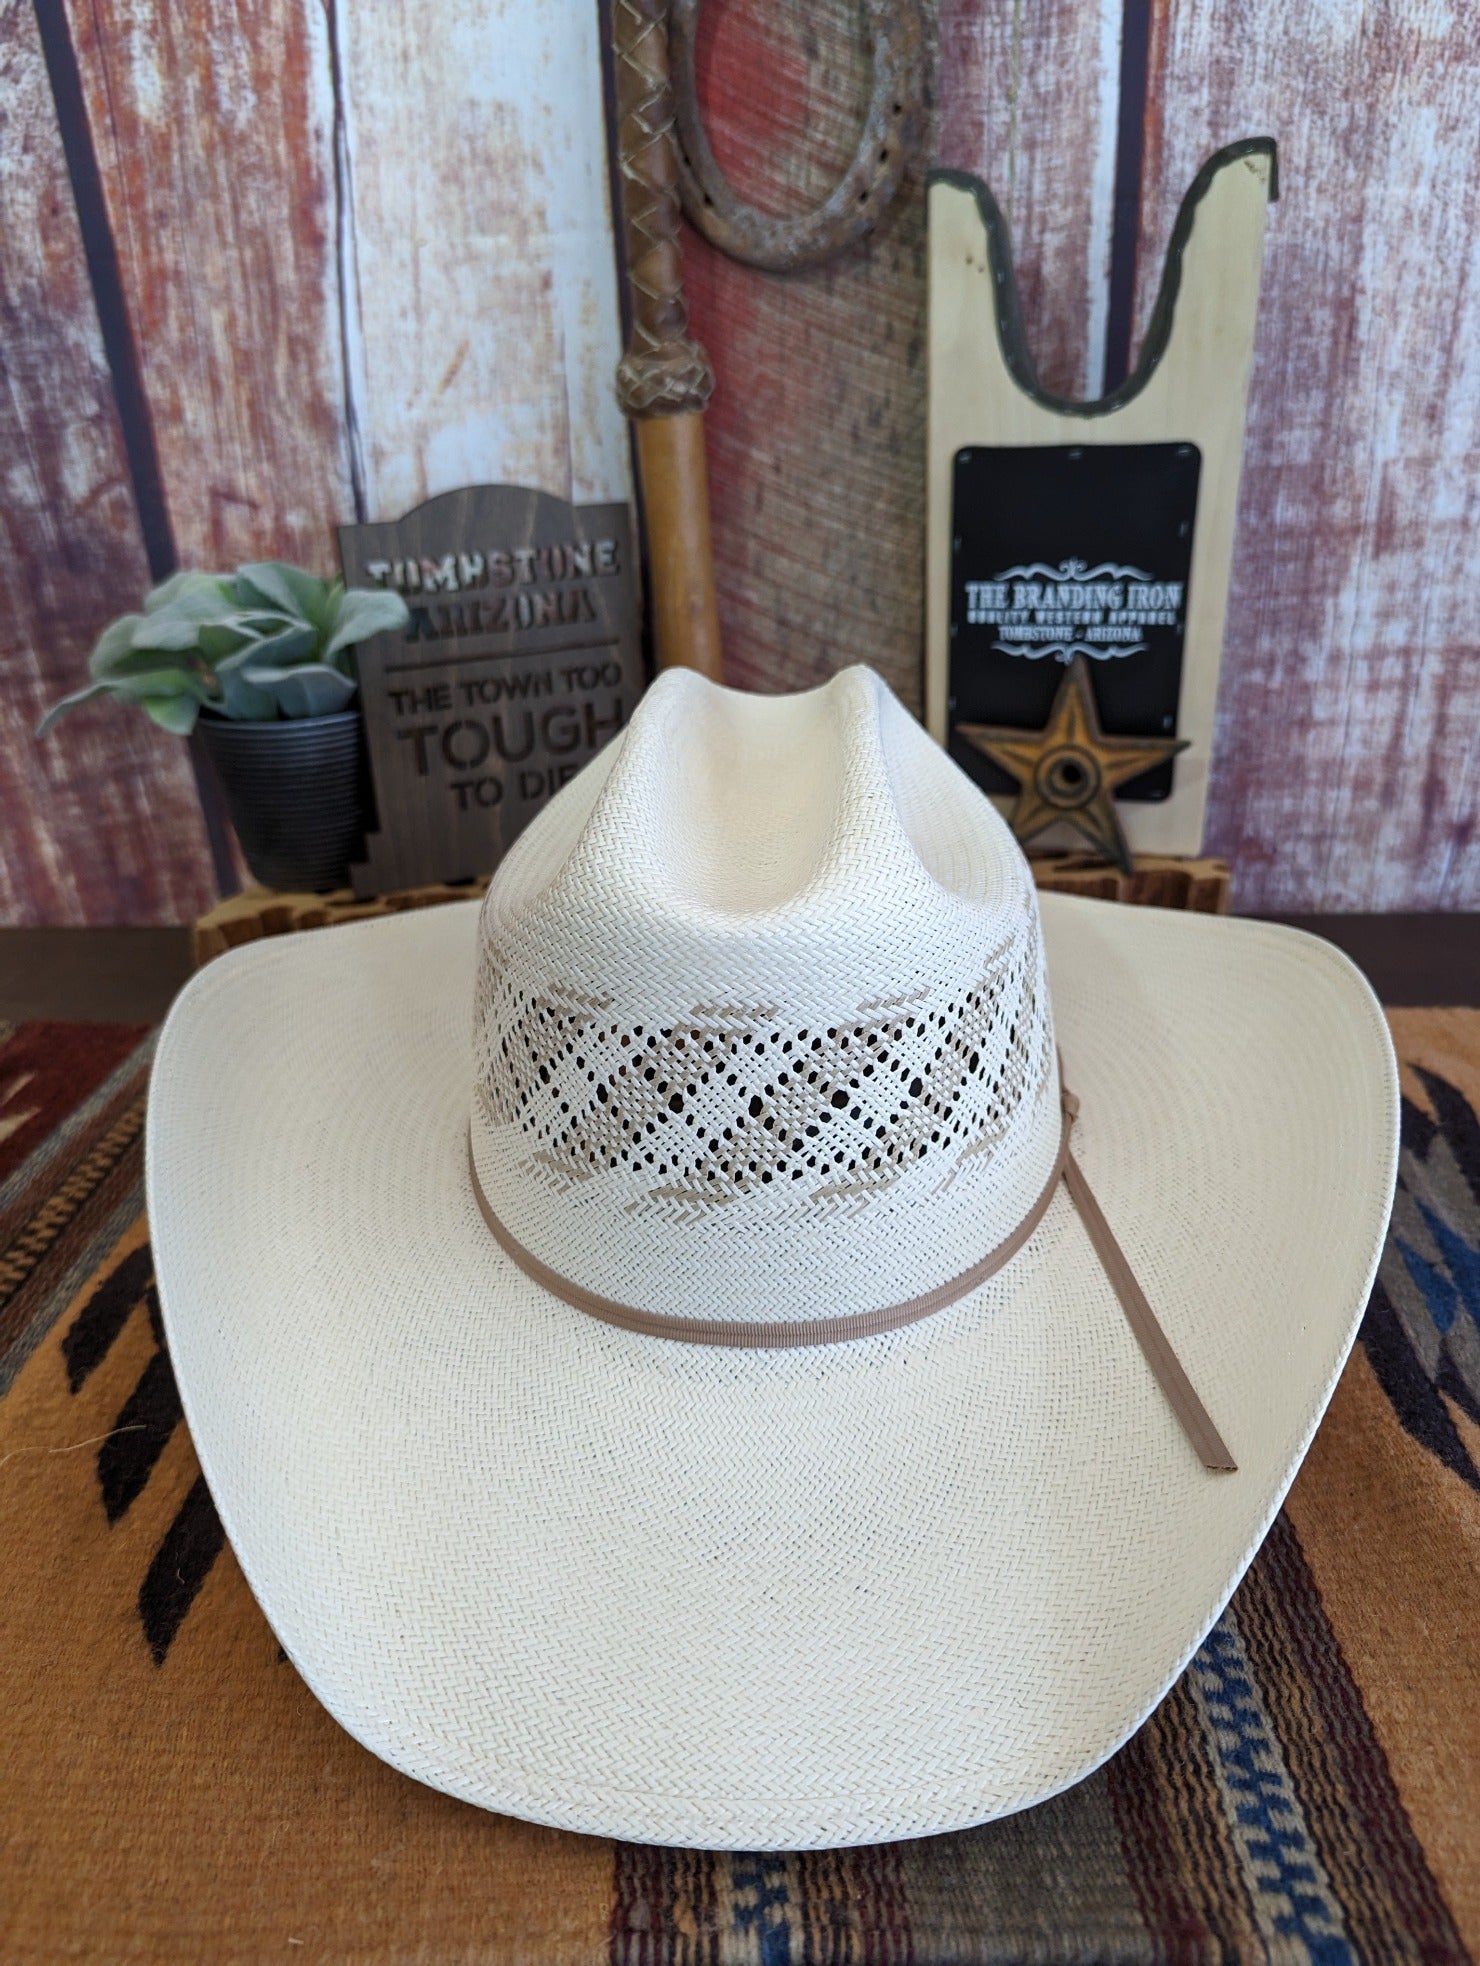 Bravestarr Thunder Stick Cowboy Hat Accessory